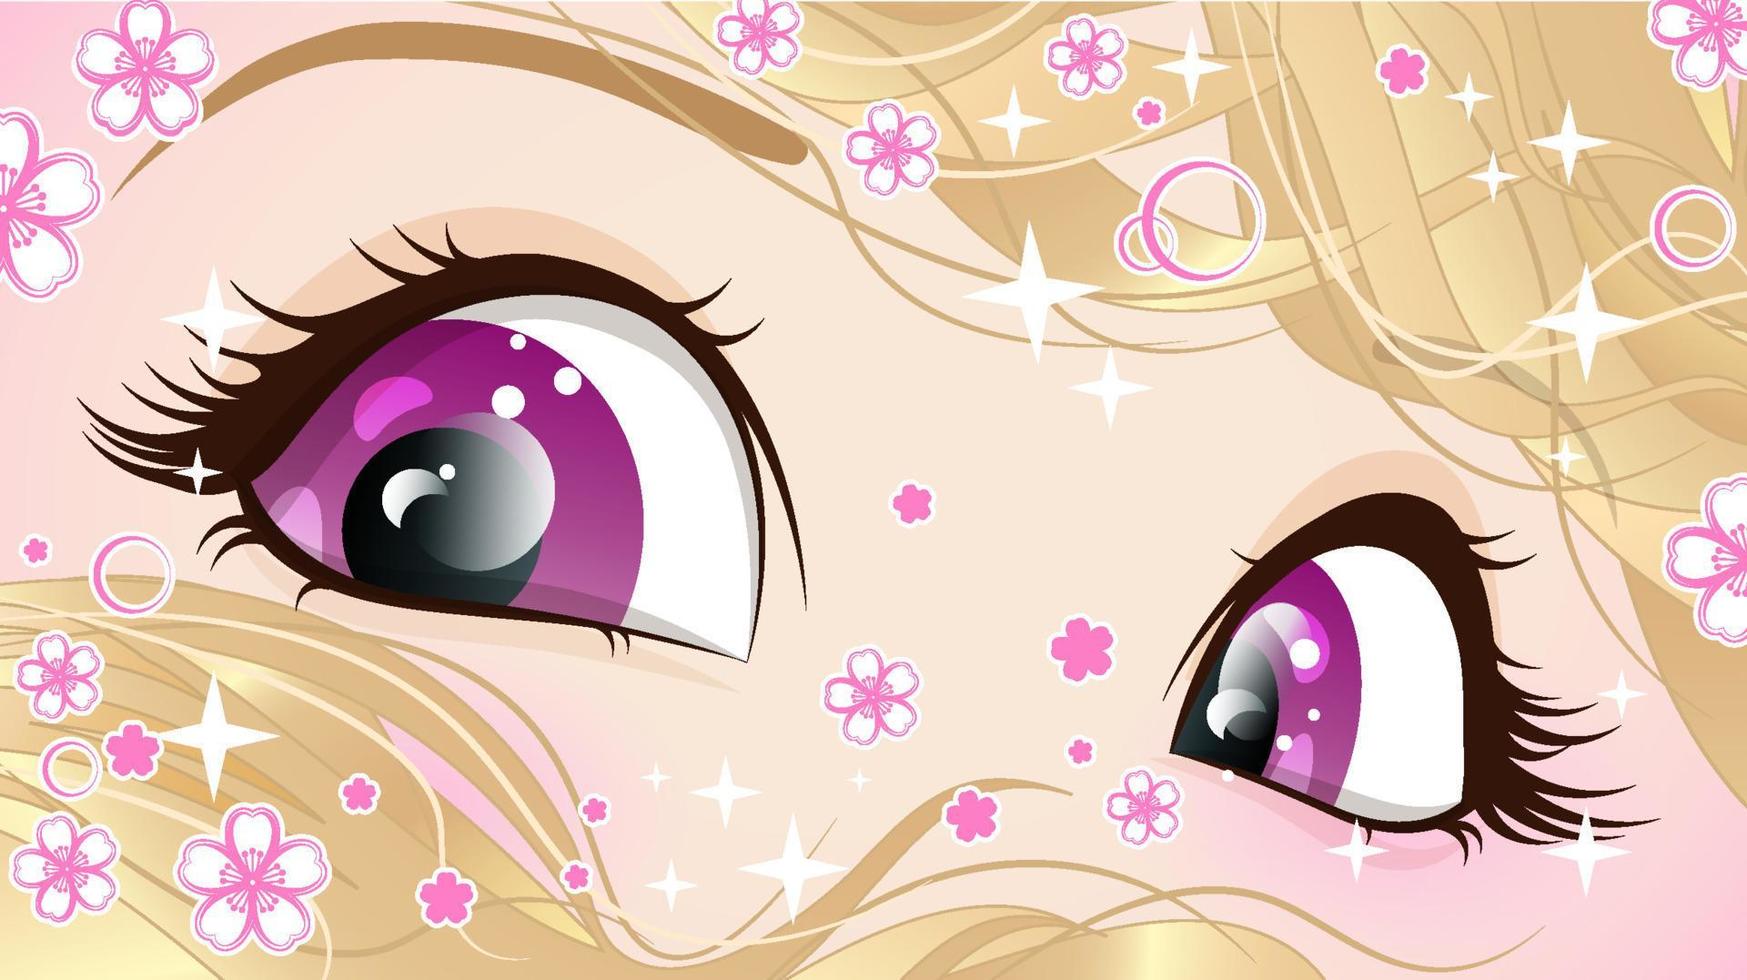 rosa ögon på en tjej med blont hår med paljetter och blommor i anime-stil. vektor